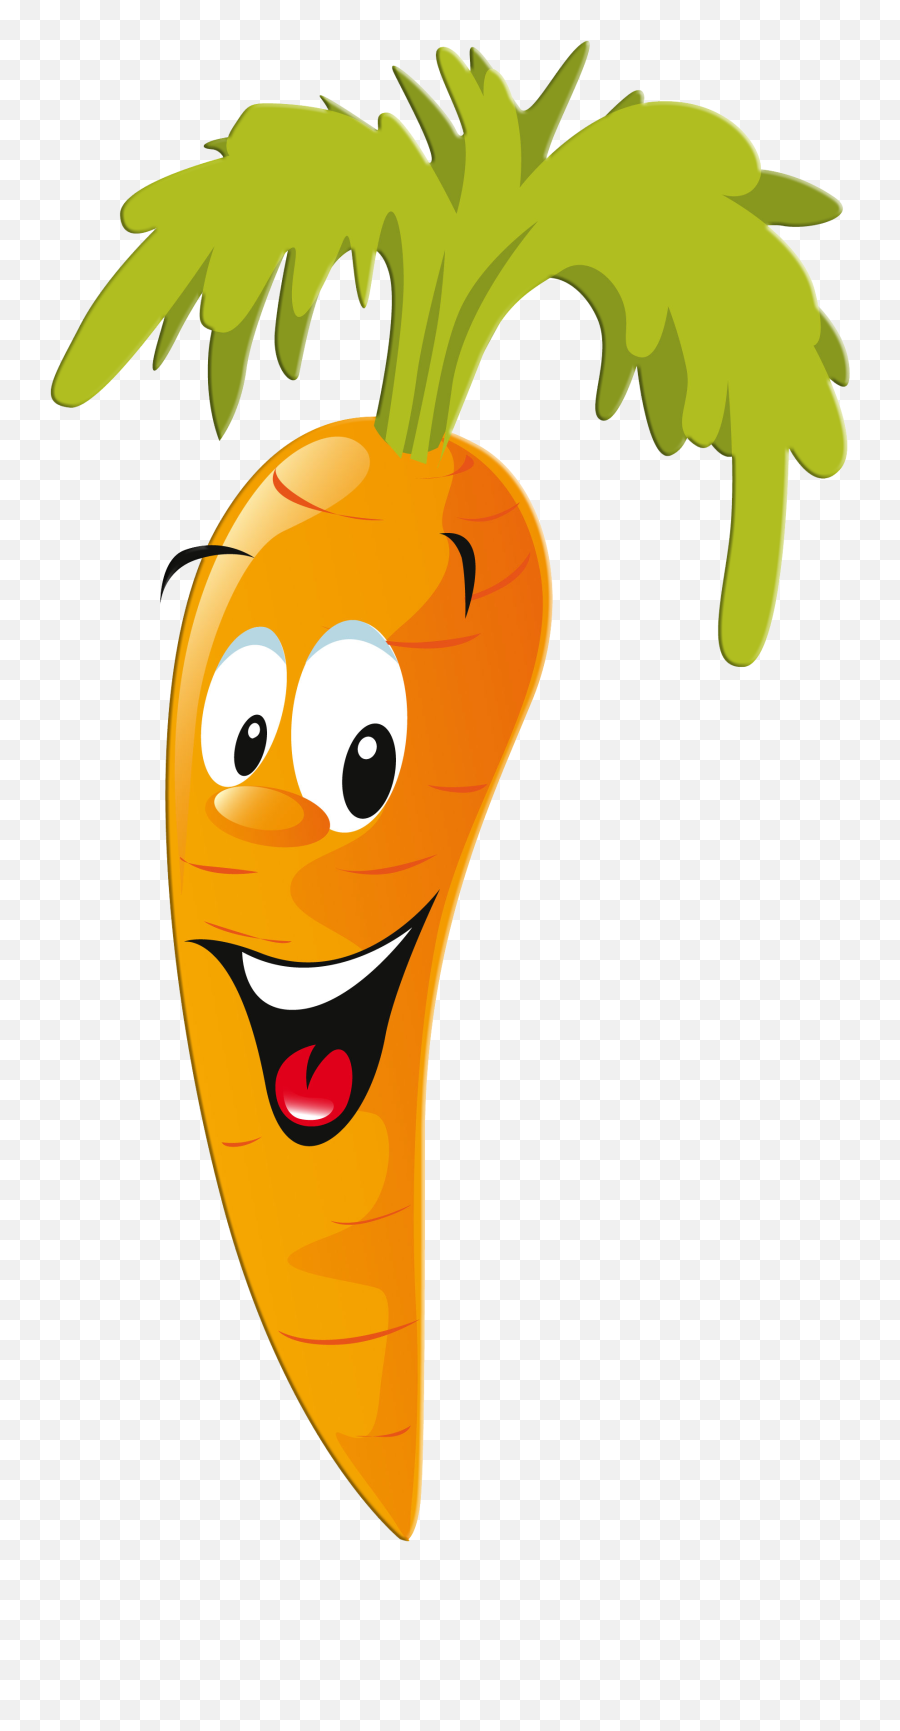 Food Emojis Png - Pin By On Art Pinterest Smiley Emojis Cartoon Carrot Clipart,Food Emojis